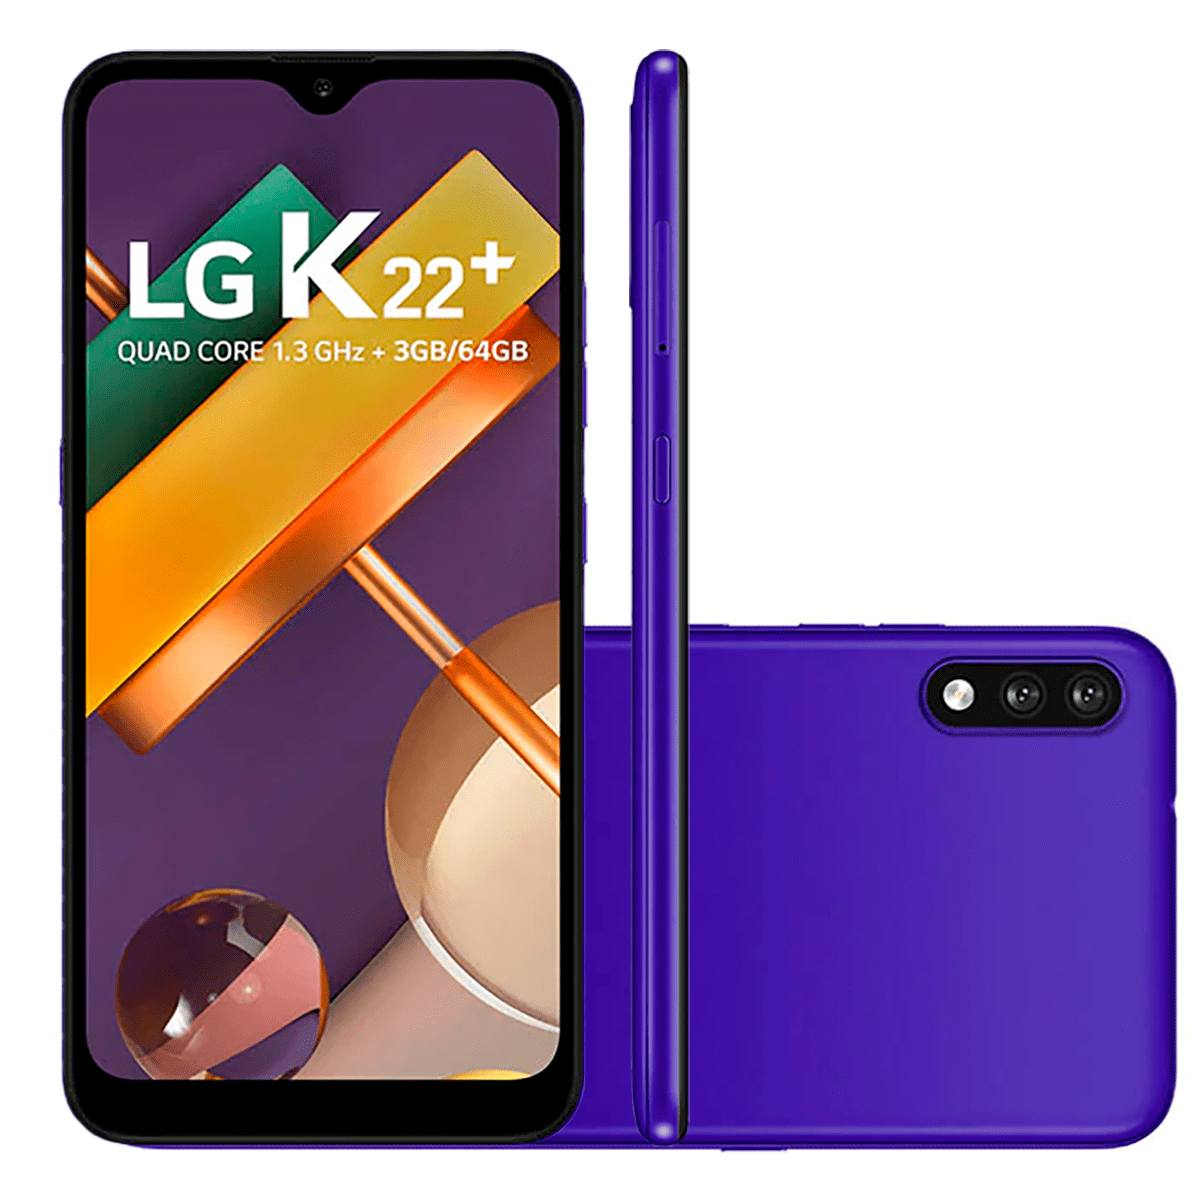 Smartphone LG K22+ LMK200BAW 3GB 64GB 6,2 13Mp+2Mp Quad-Core Azul